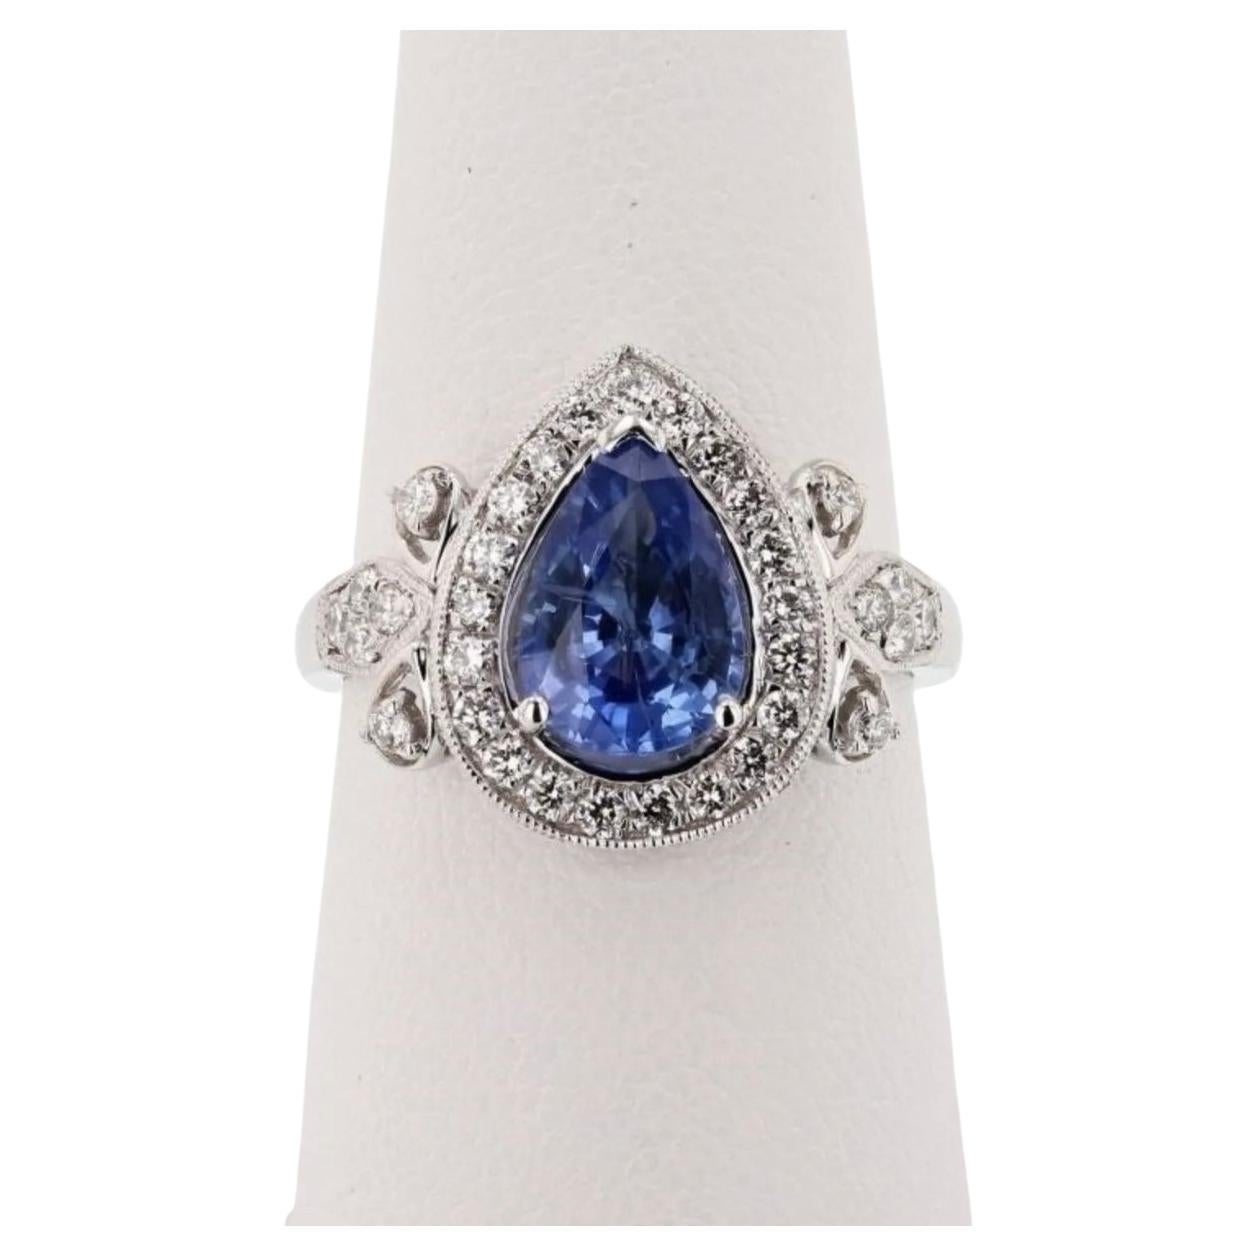 Authentic Platinum 2.02 Ct Sapphire & Diamond Ring Appraisal Inc